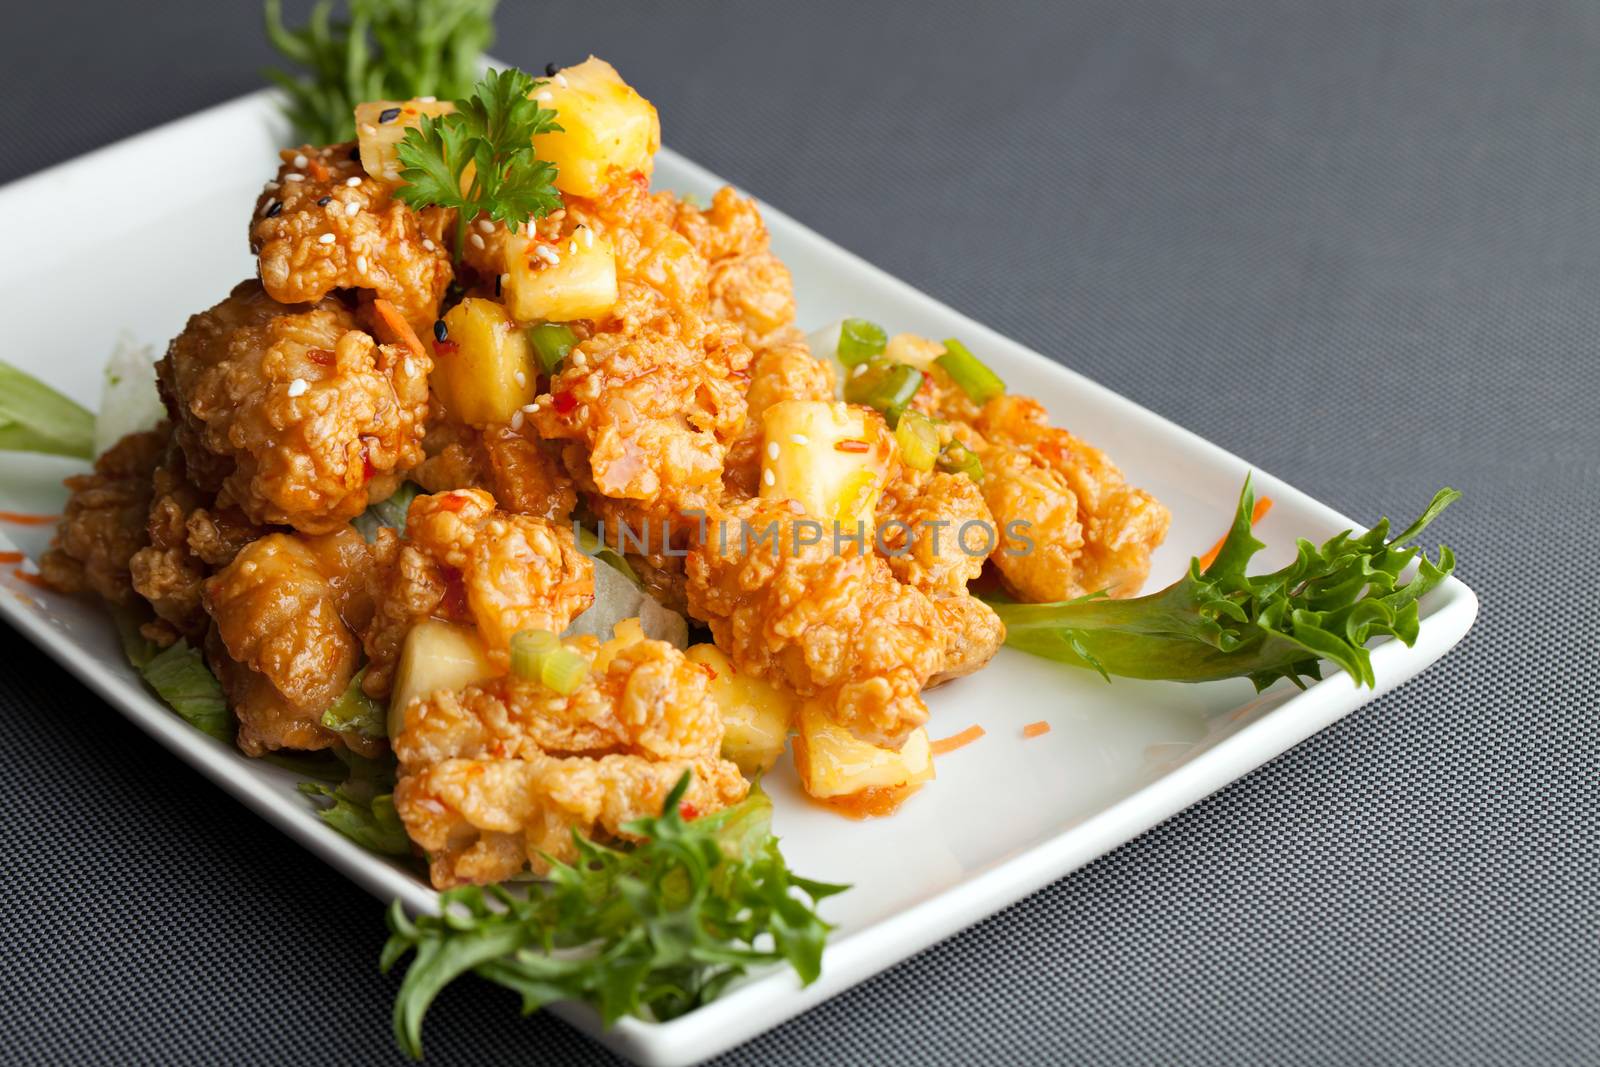 Thai fried calamari appetizer with fresh pineapple chunks.